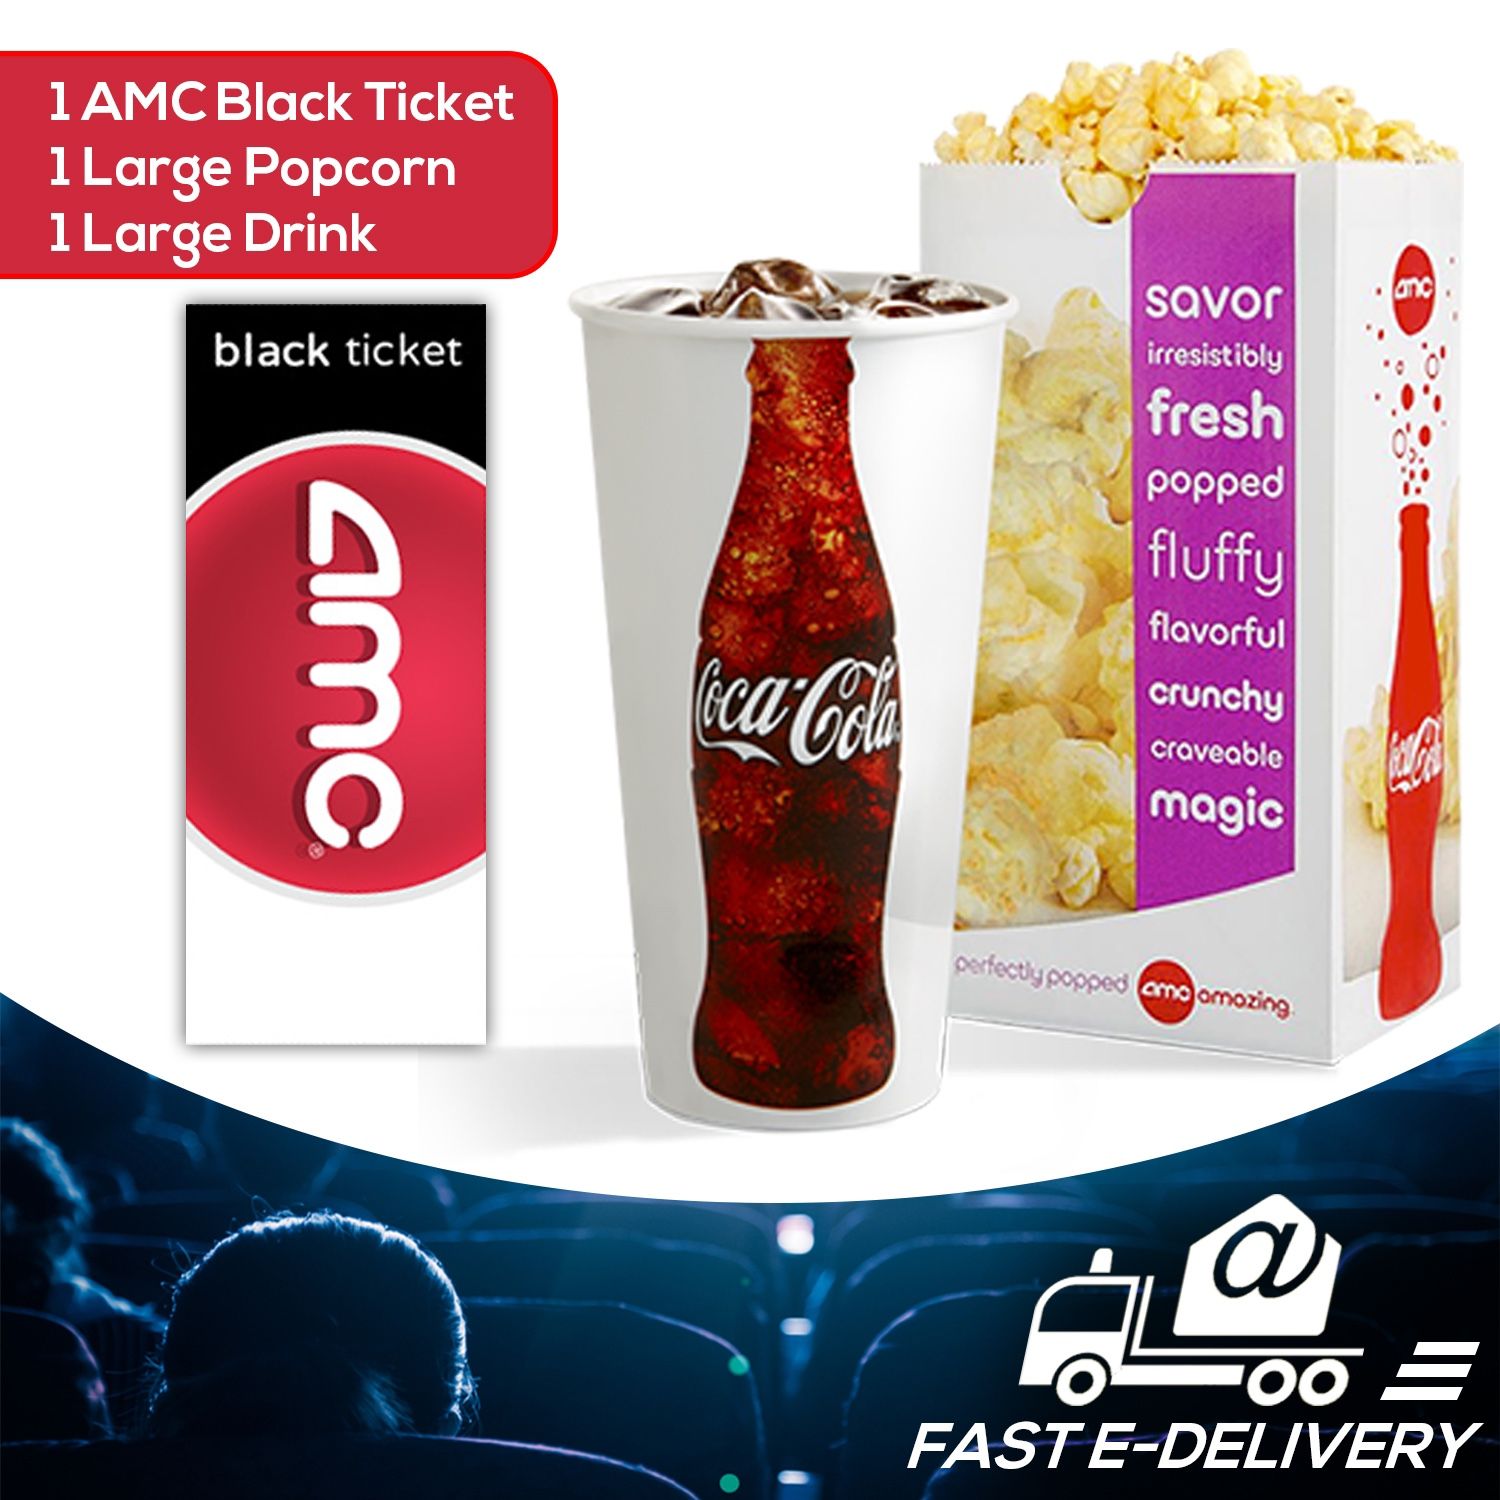 AMC Black Ticket + Large Popcorn + Large Drink